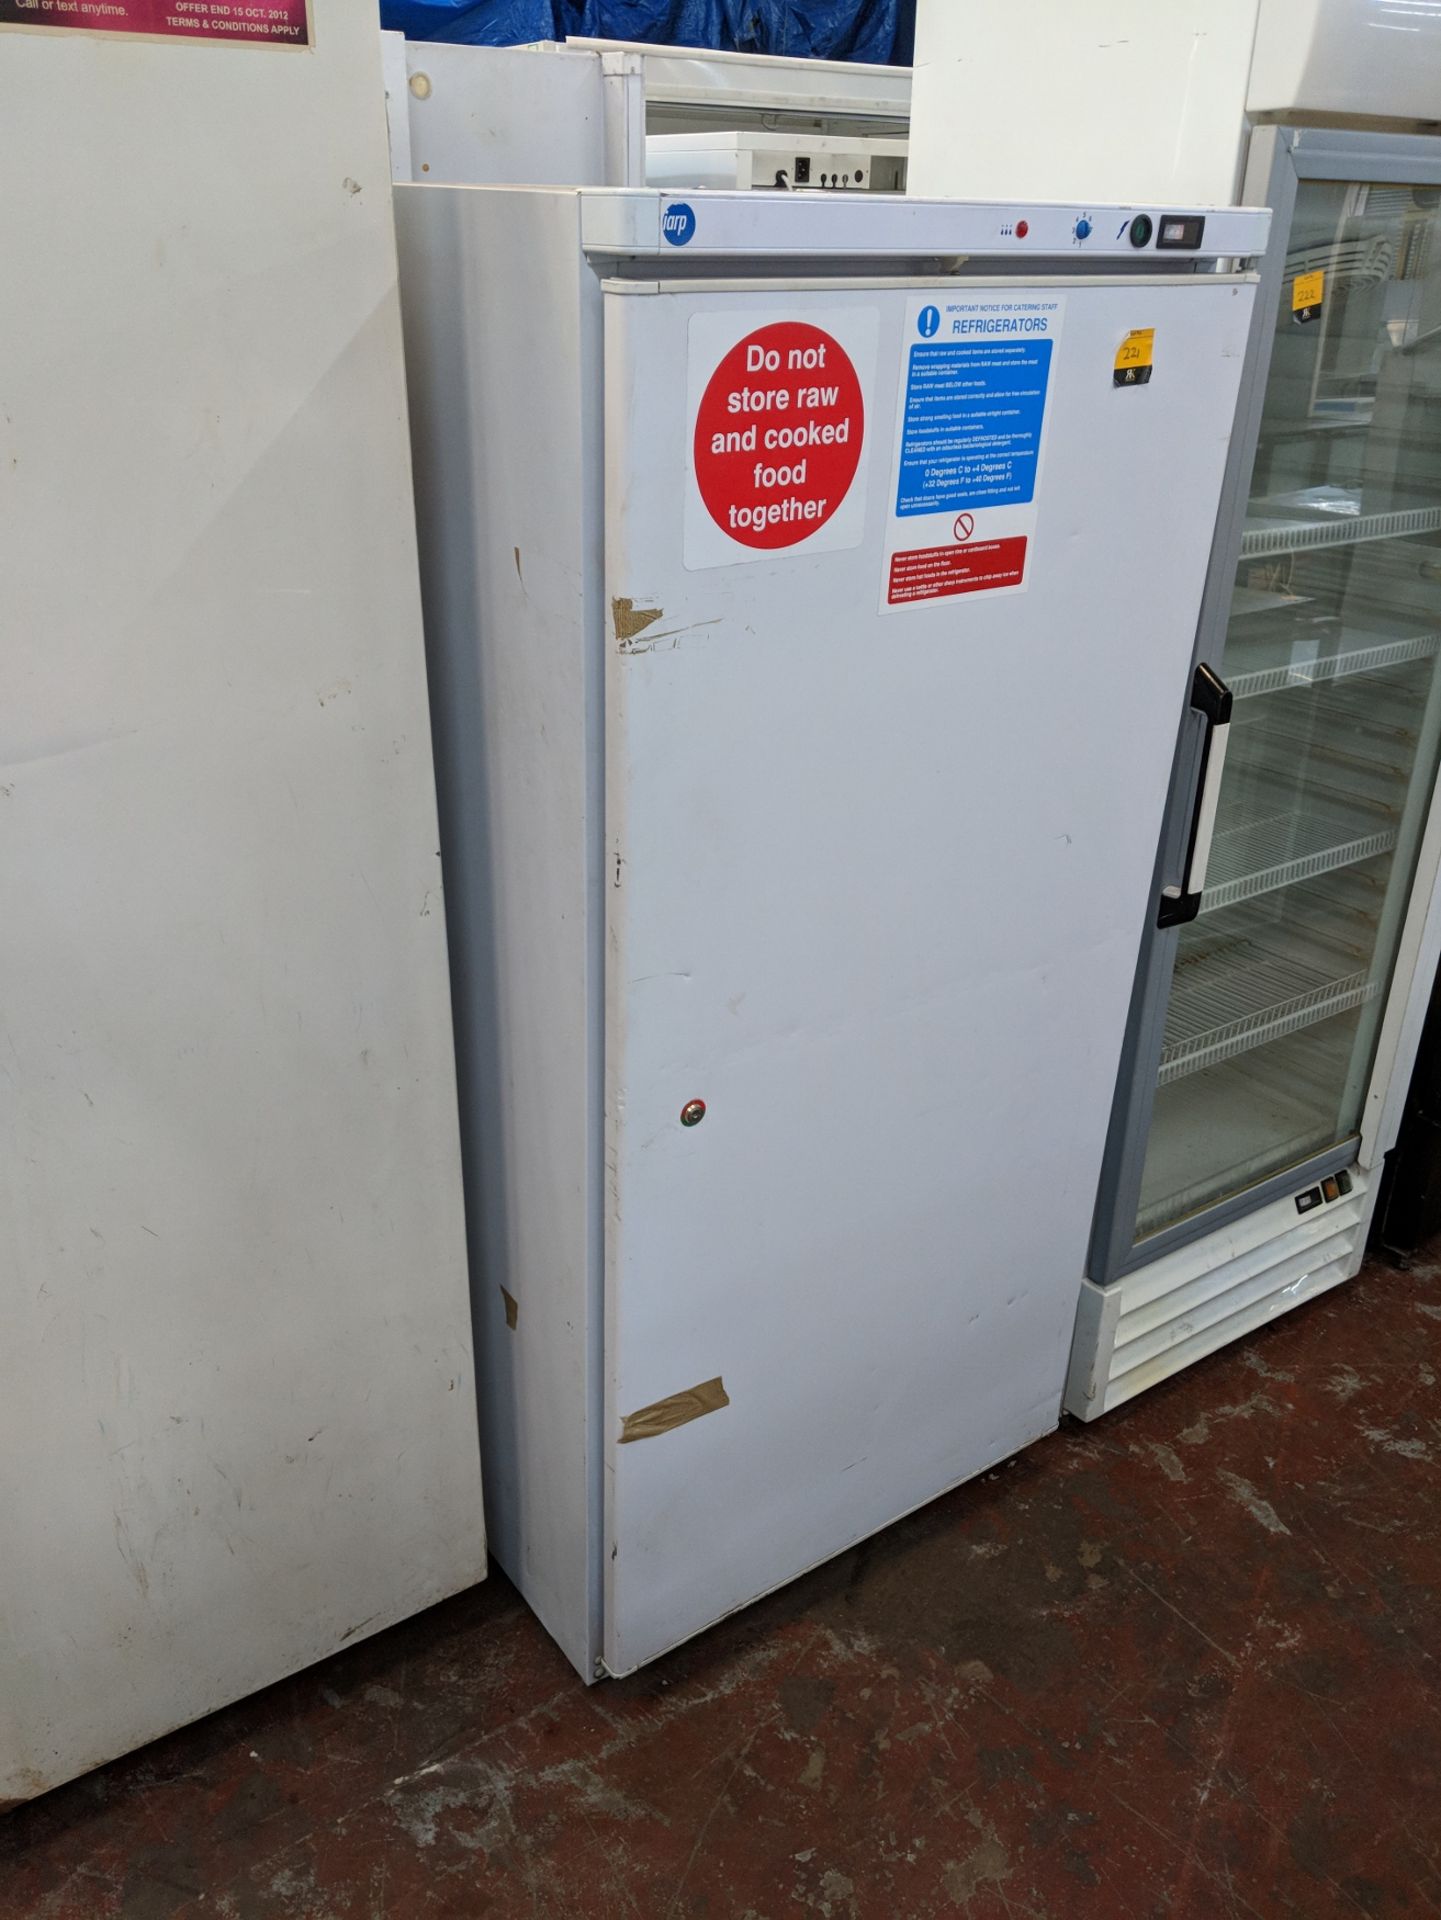 Iarp large white wide fridge, model AB500PV IMPORTANT: Please remember goods successfully bid upon